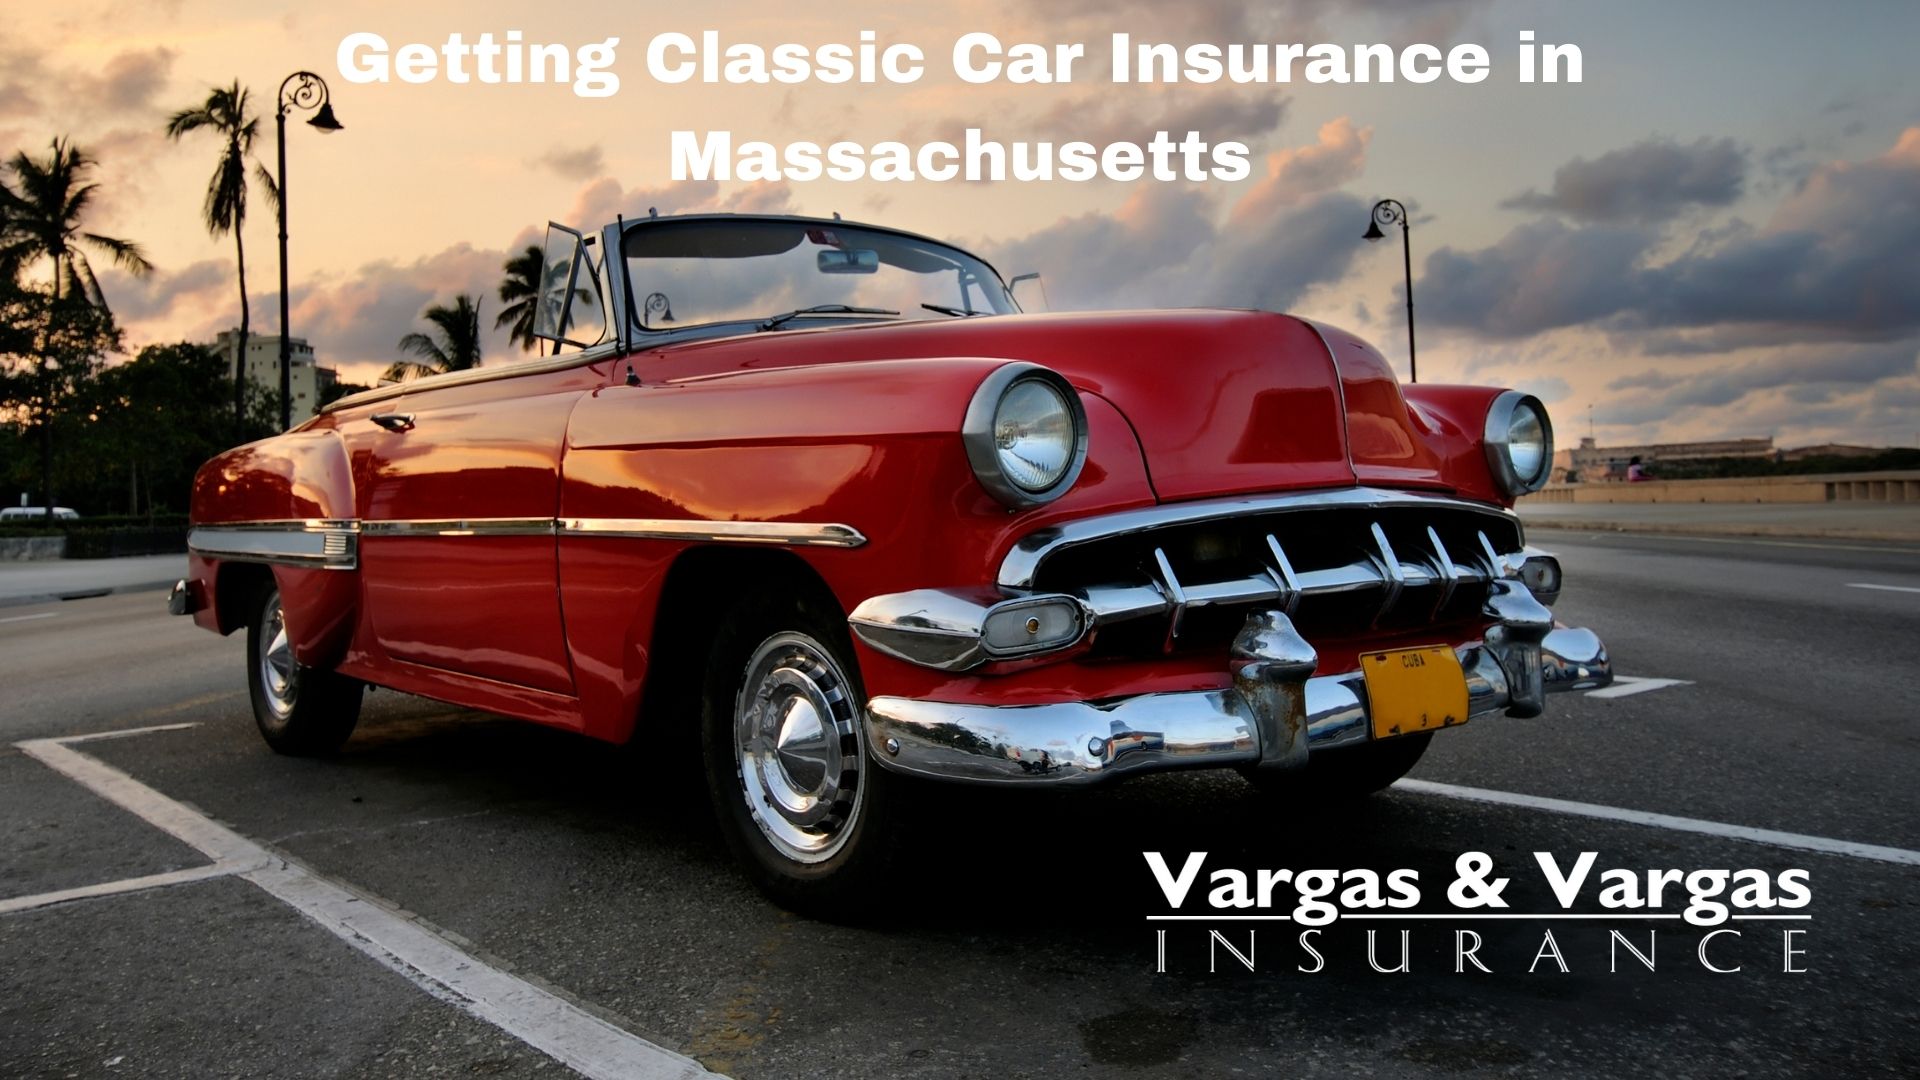 Getting Classic Car Insurance in Massachusetts